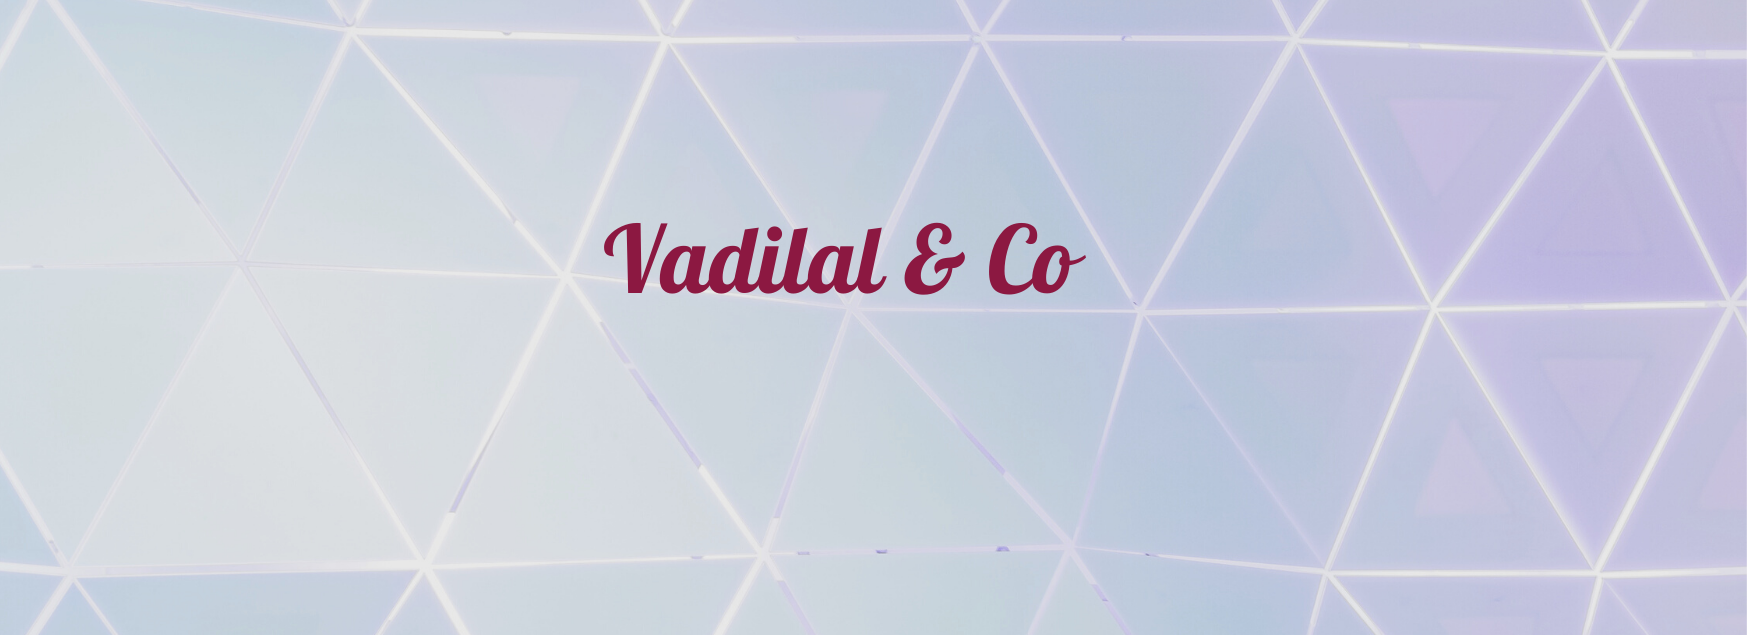 Vadilal & Co.